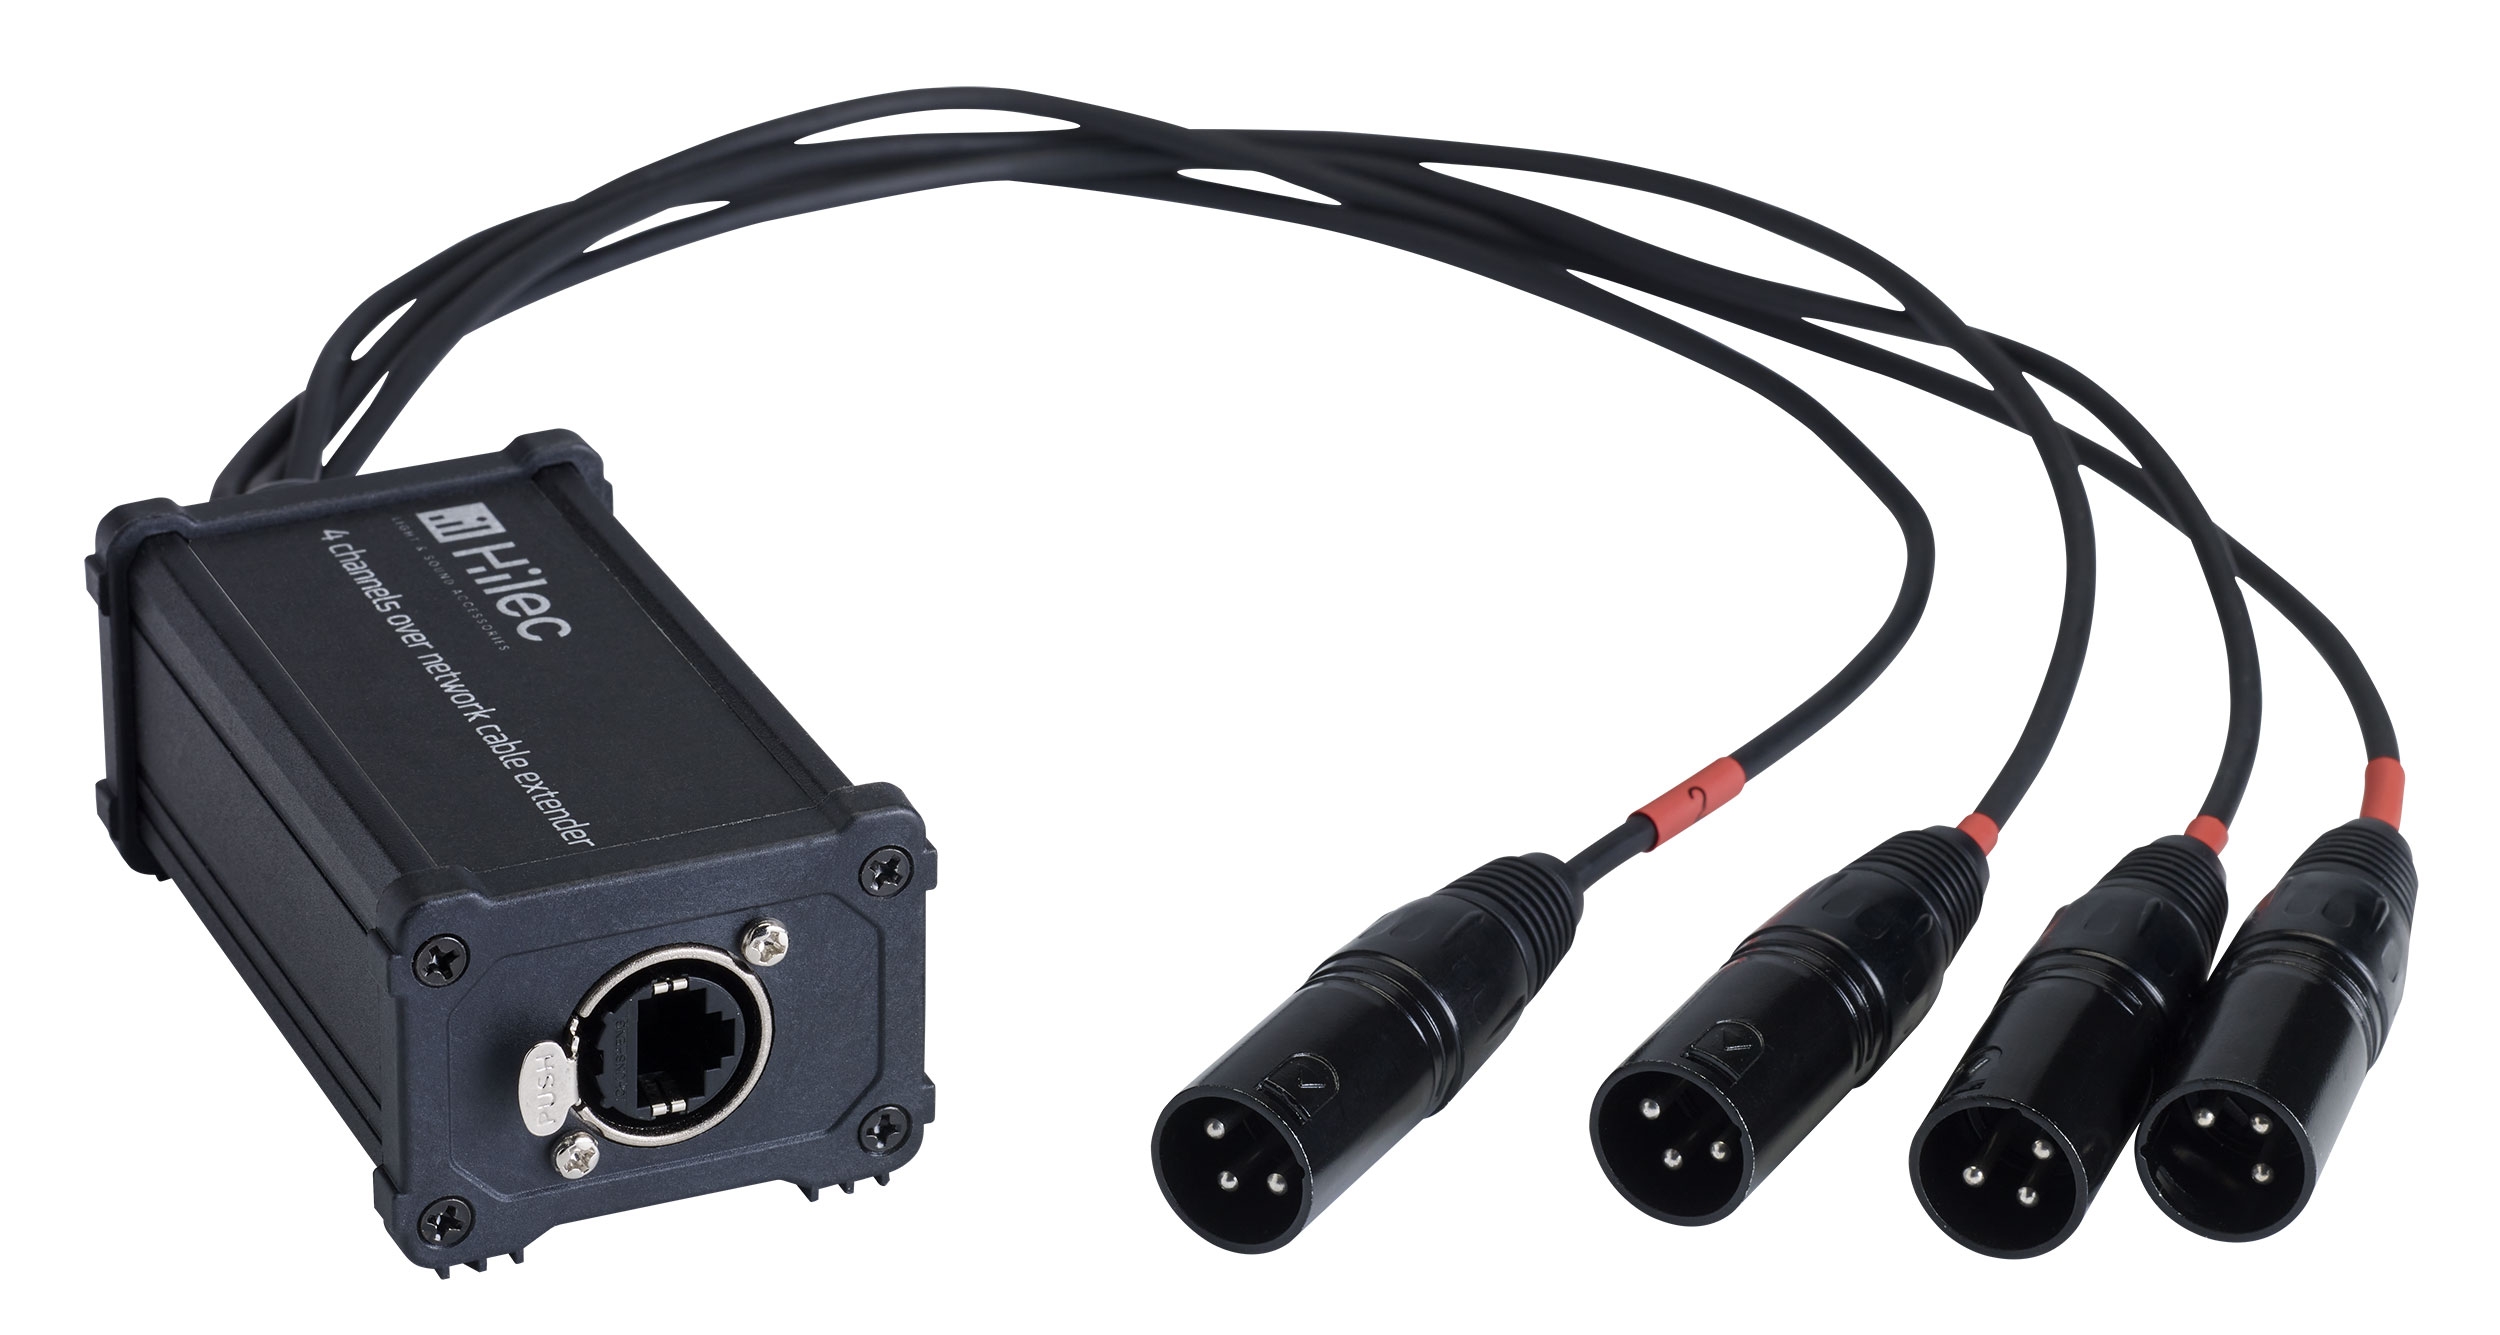 RJ45 / XLR3M adapter box for audio or DMX signal